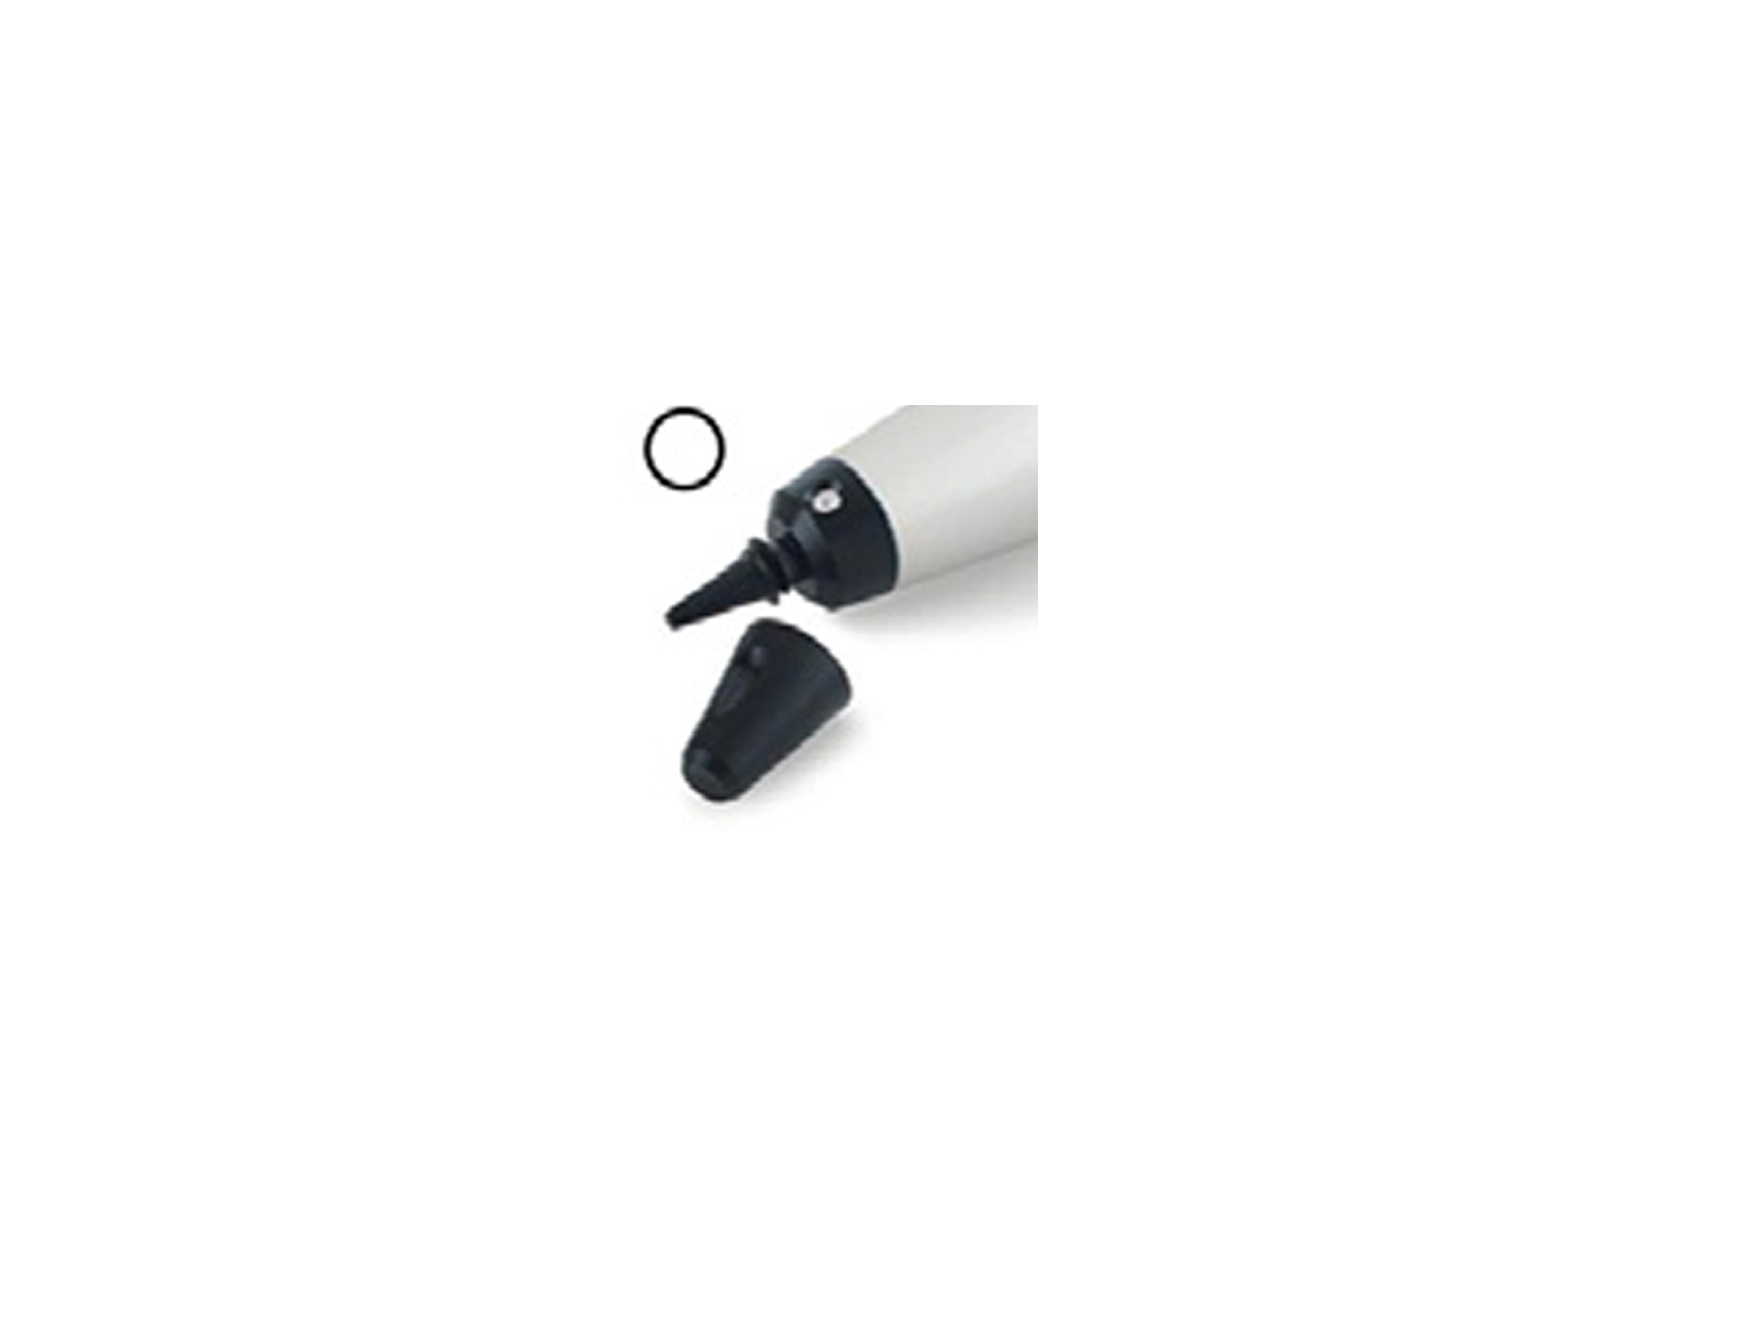 CryoPen applicator wit/rode dot 2 - 6 mm  - 1 st